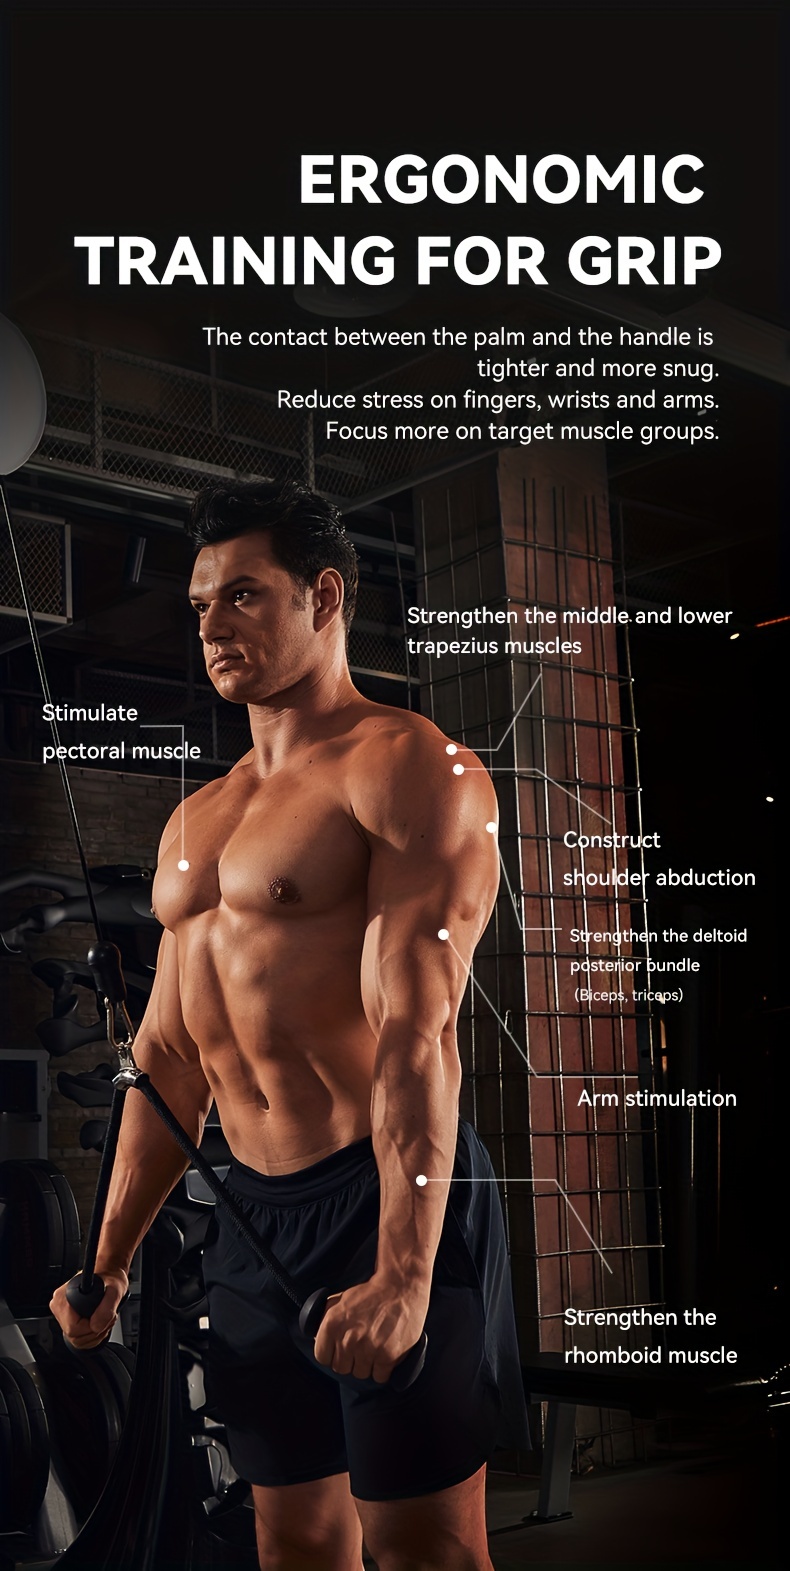 How To Build Razor Sharp Triceps? by fitnessmenz - Issuu